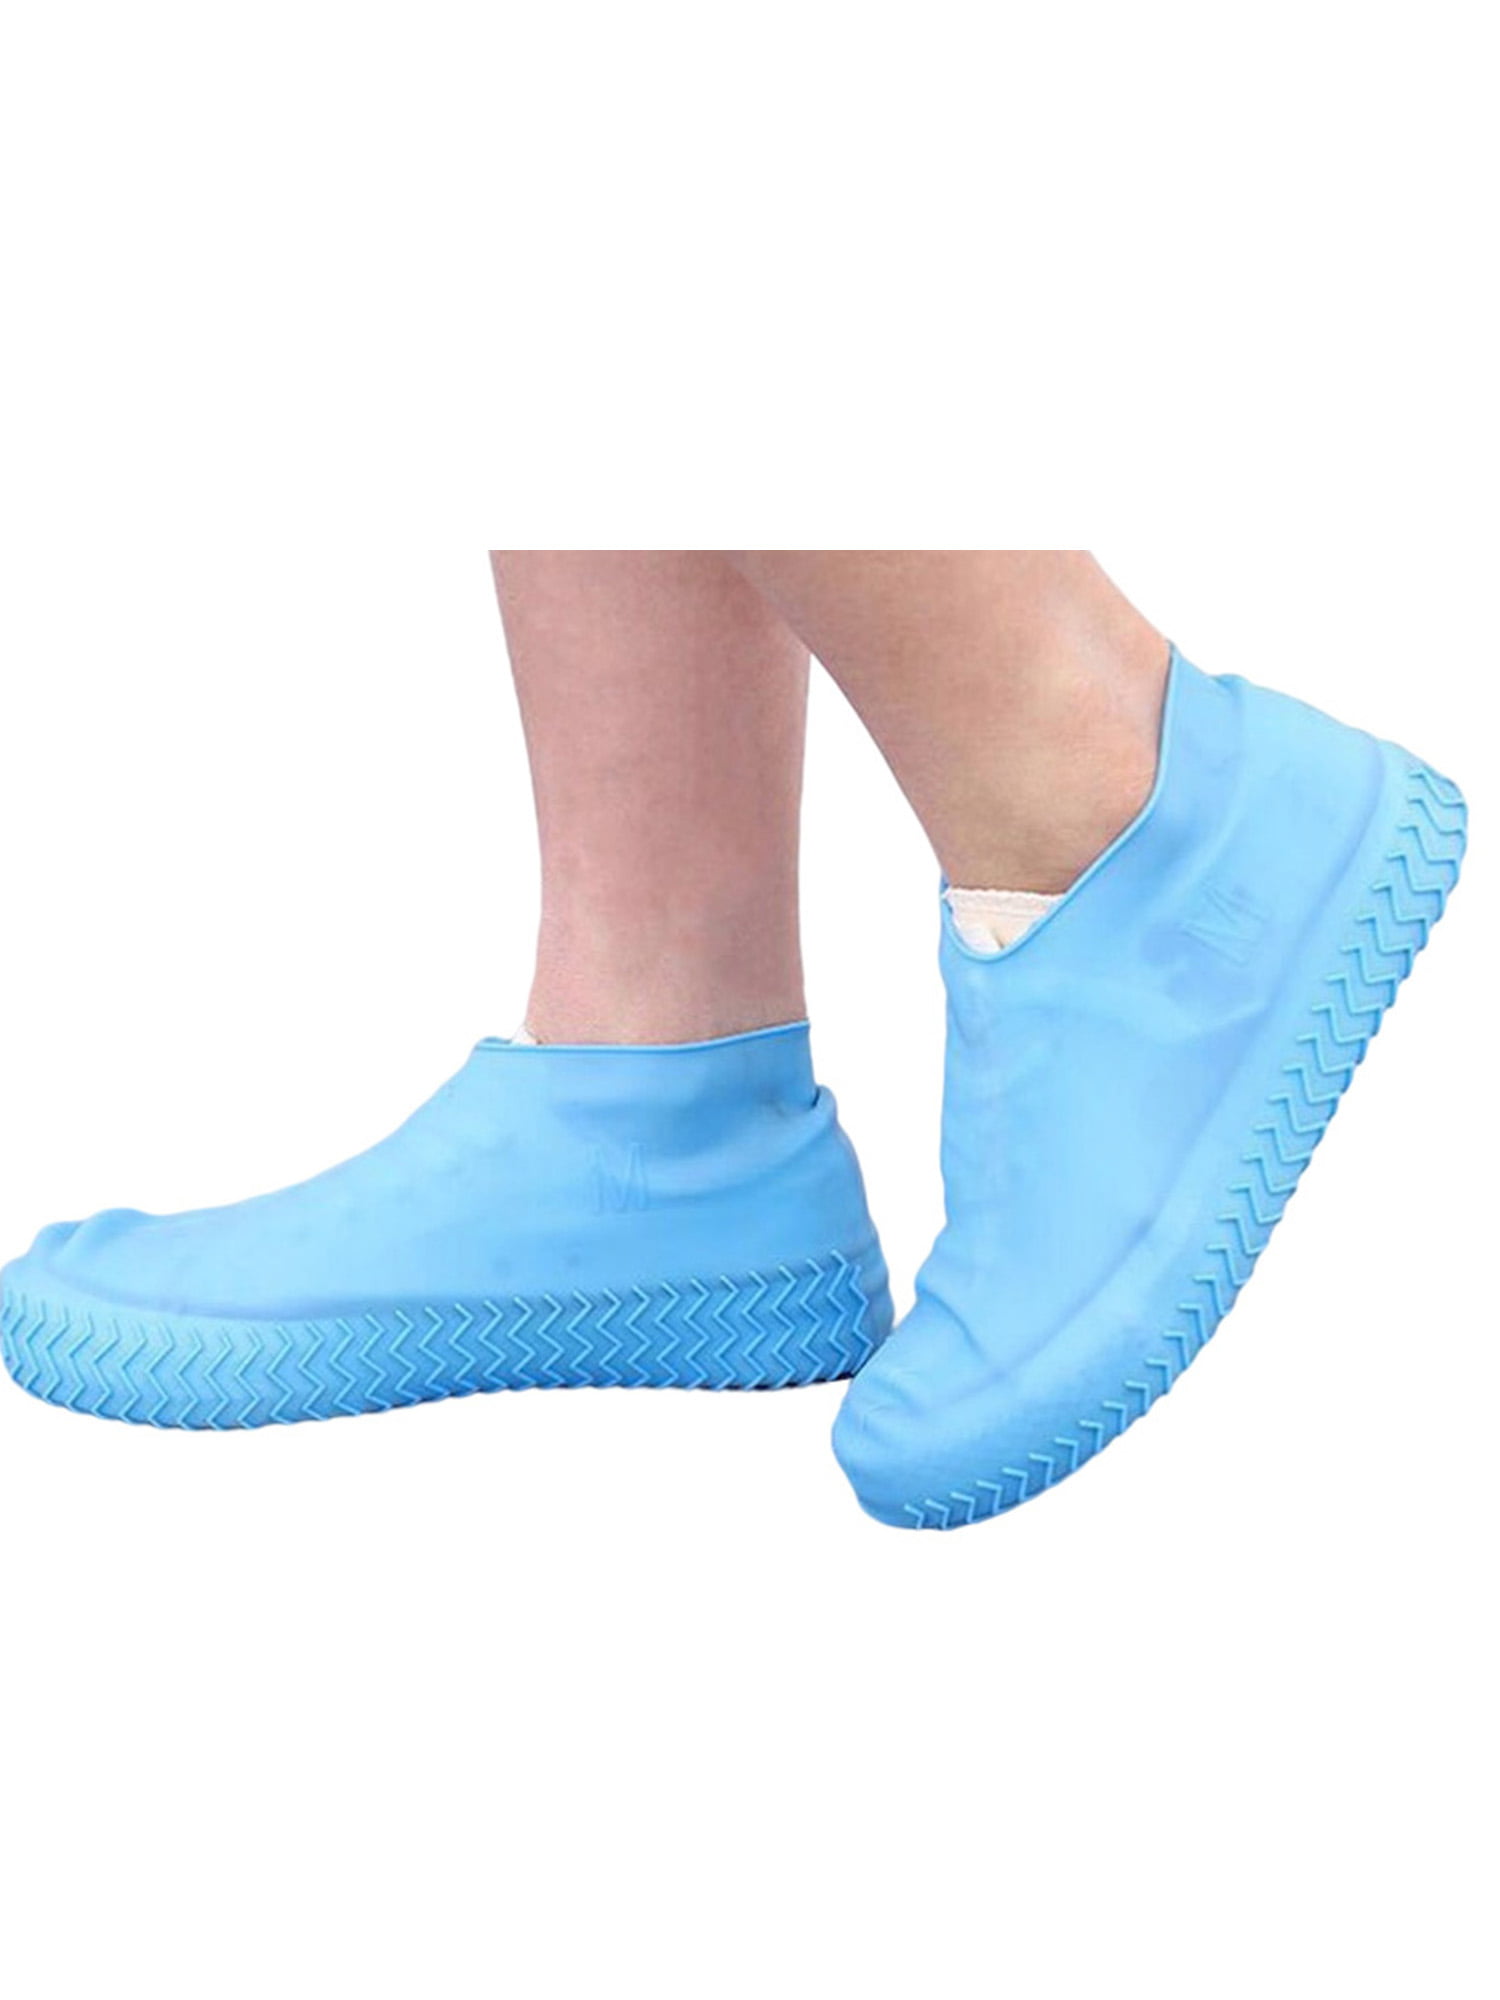 Unisex Kids Adult Solid Overshoes Rain Shoe Covers Waterproof Foldable Slip NEW 